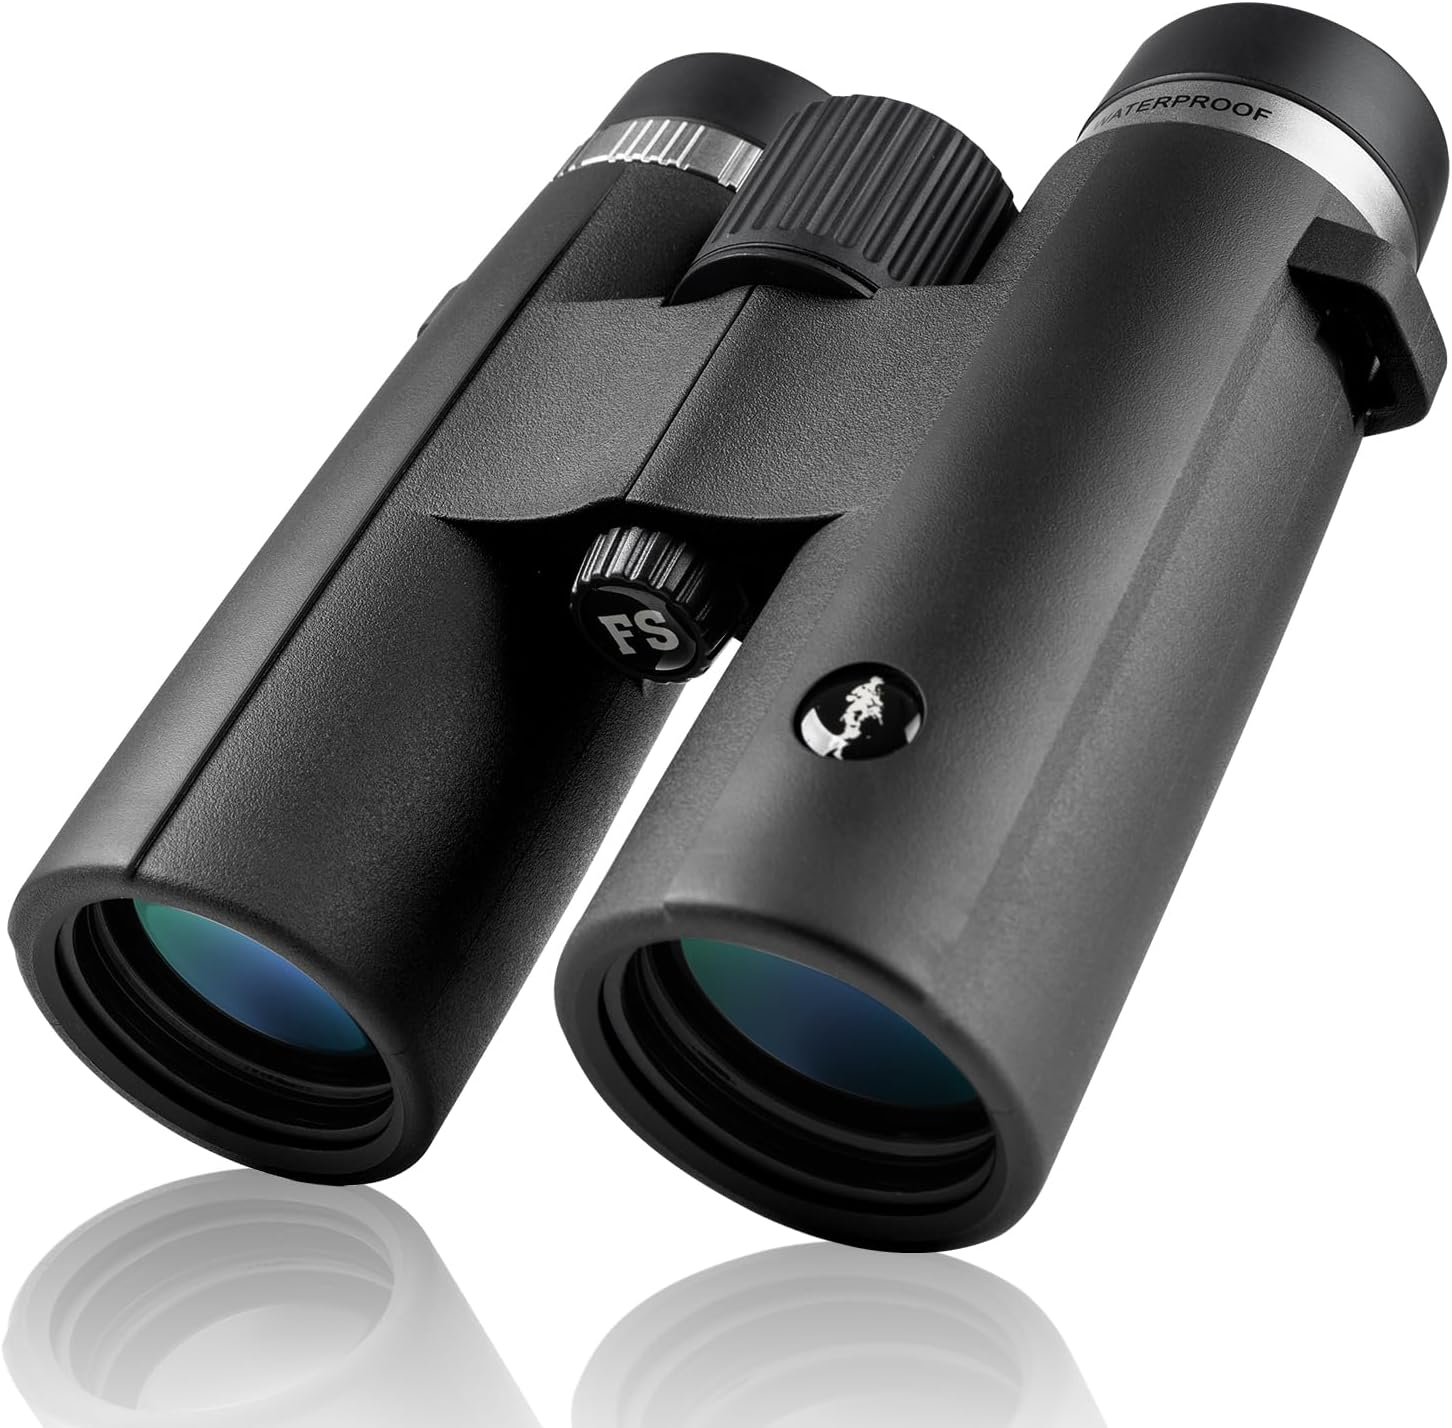 12×42 Waterproof HD Compact Binoculars